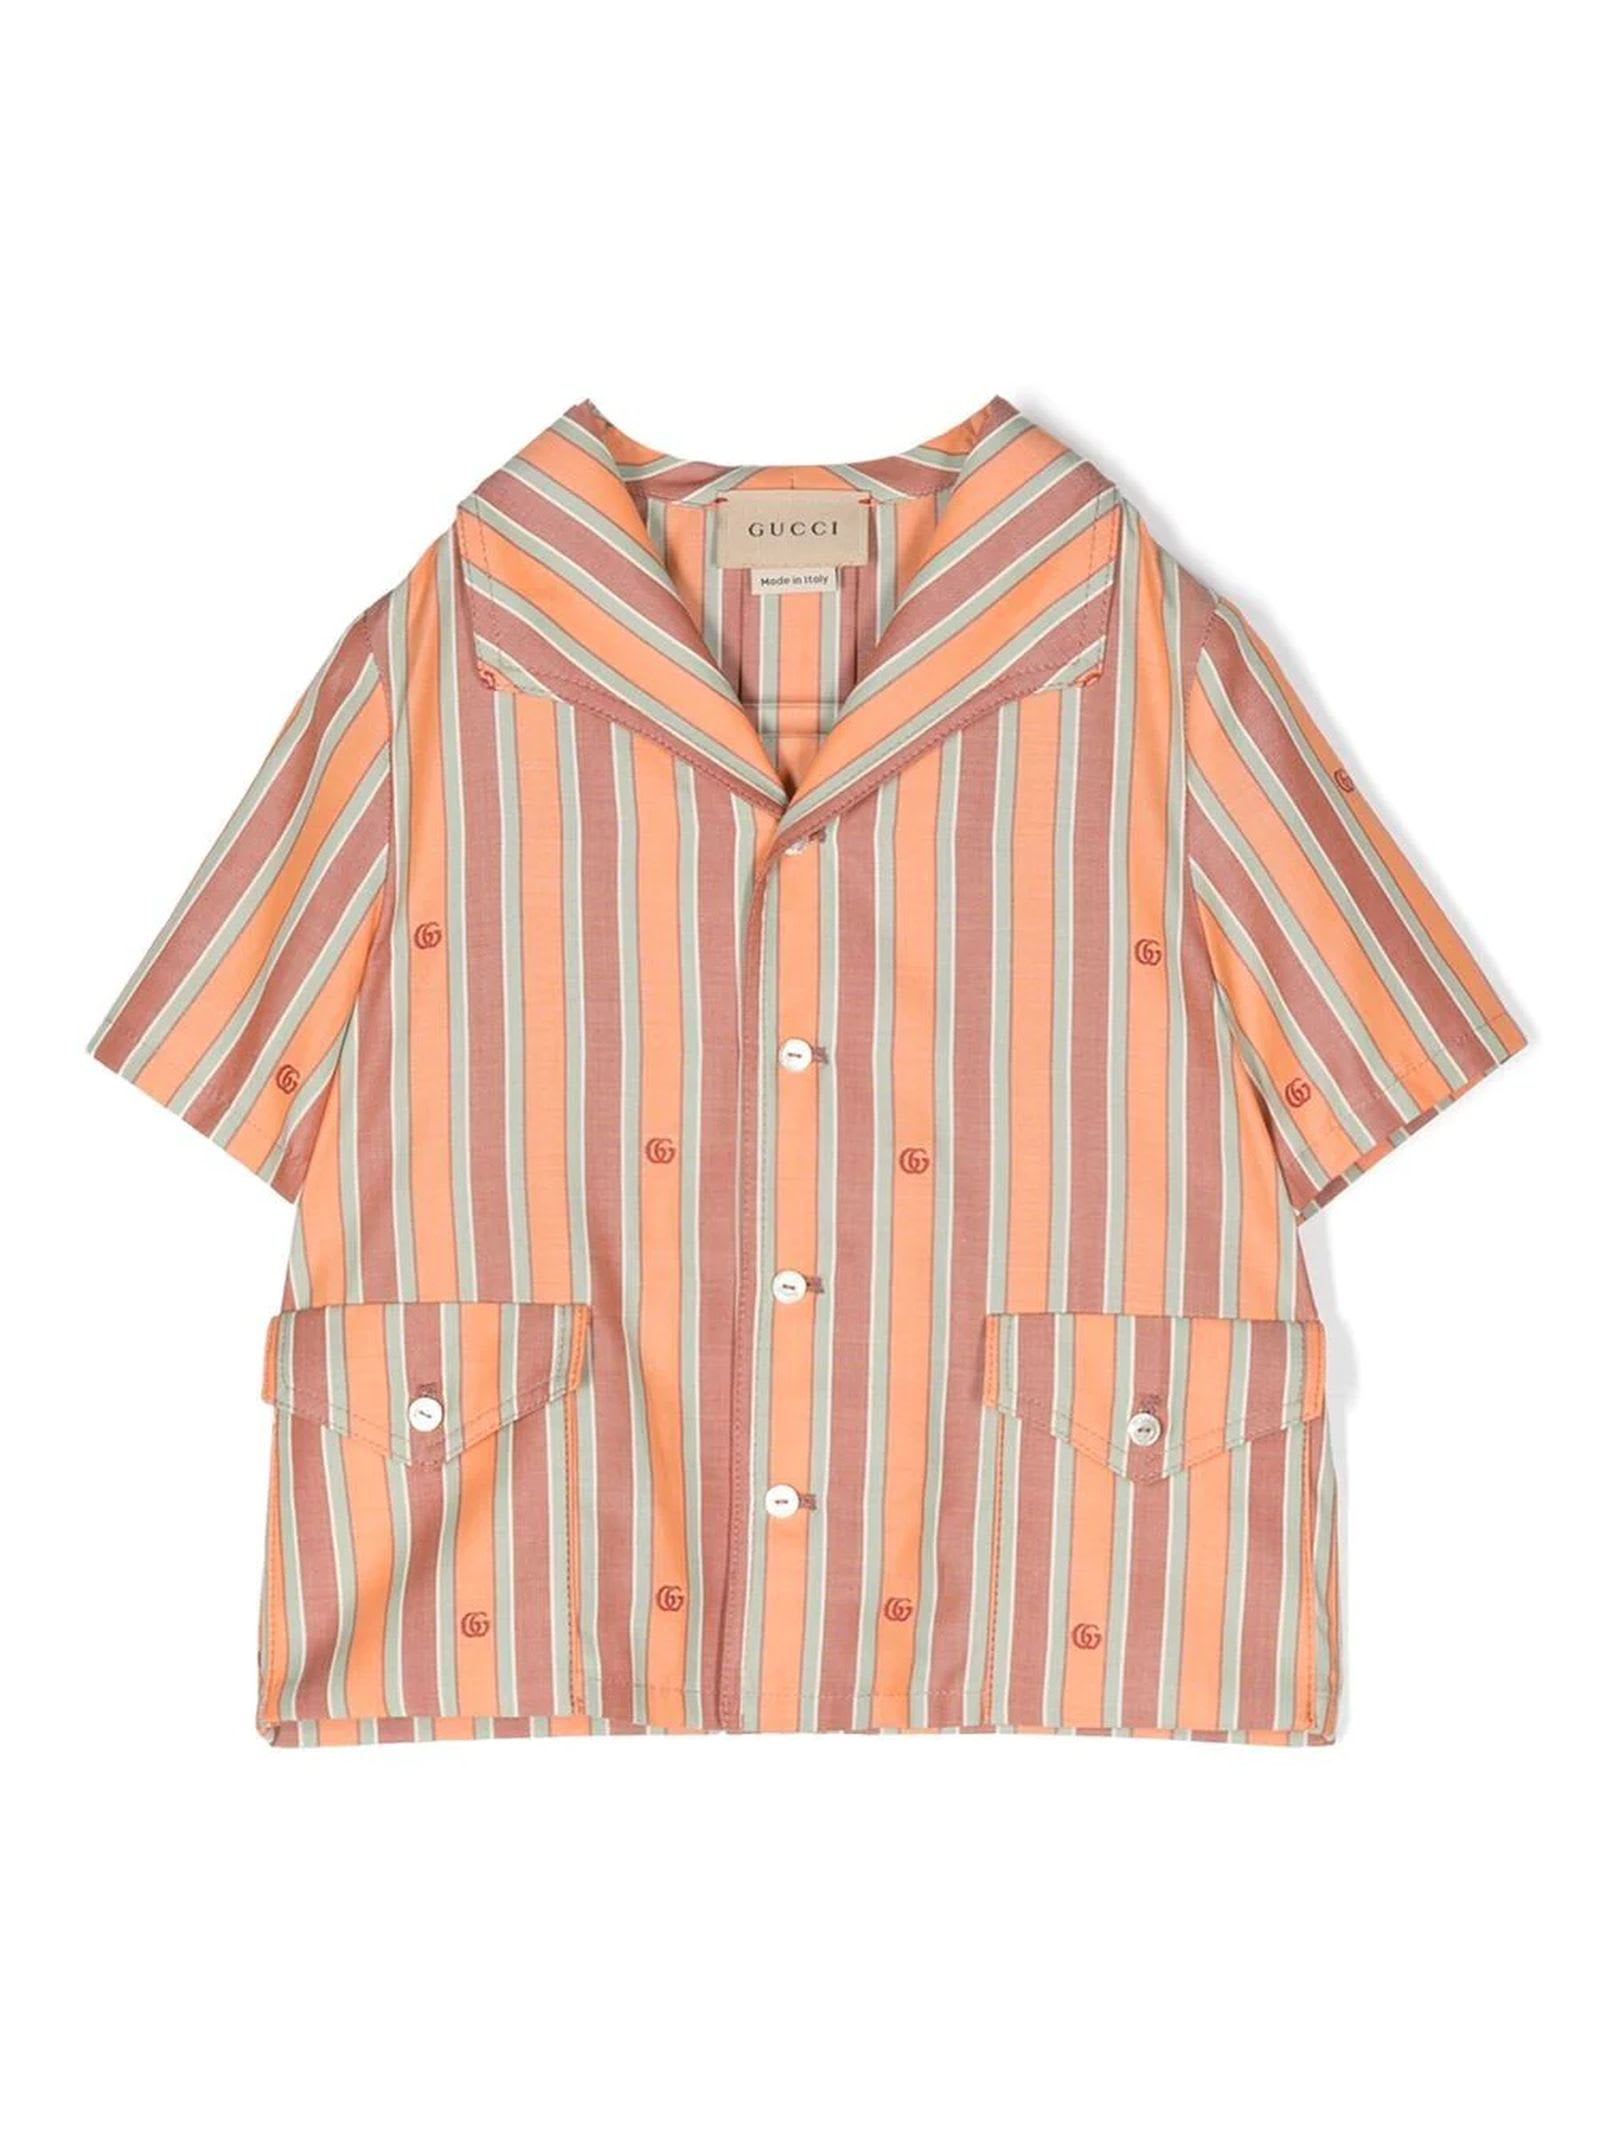 Gucci Kids Shirts Orange